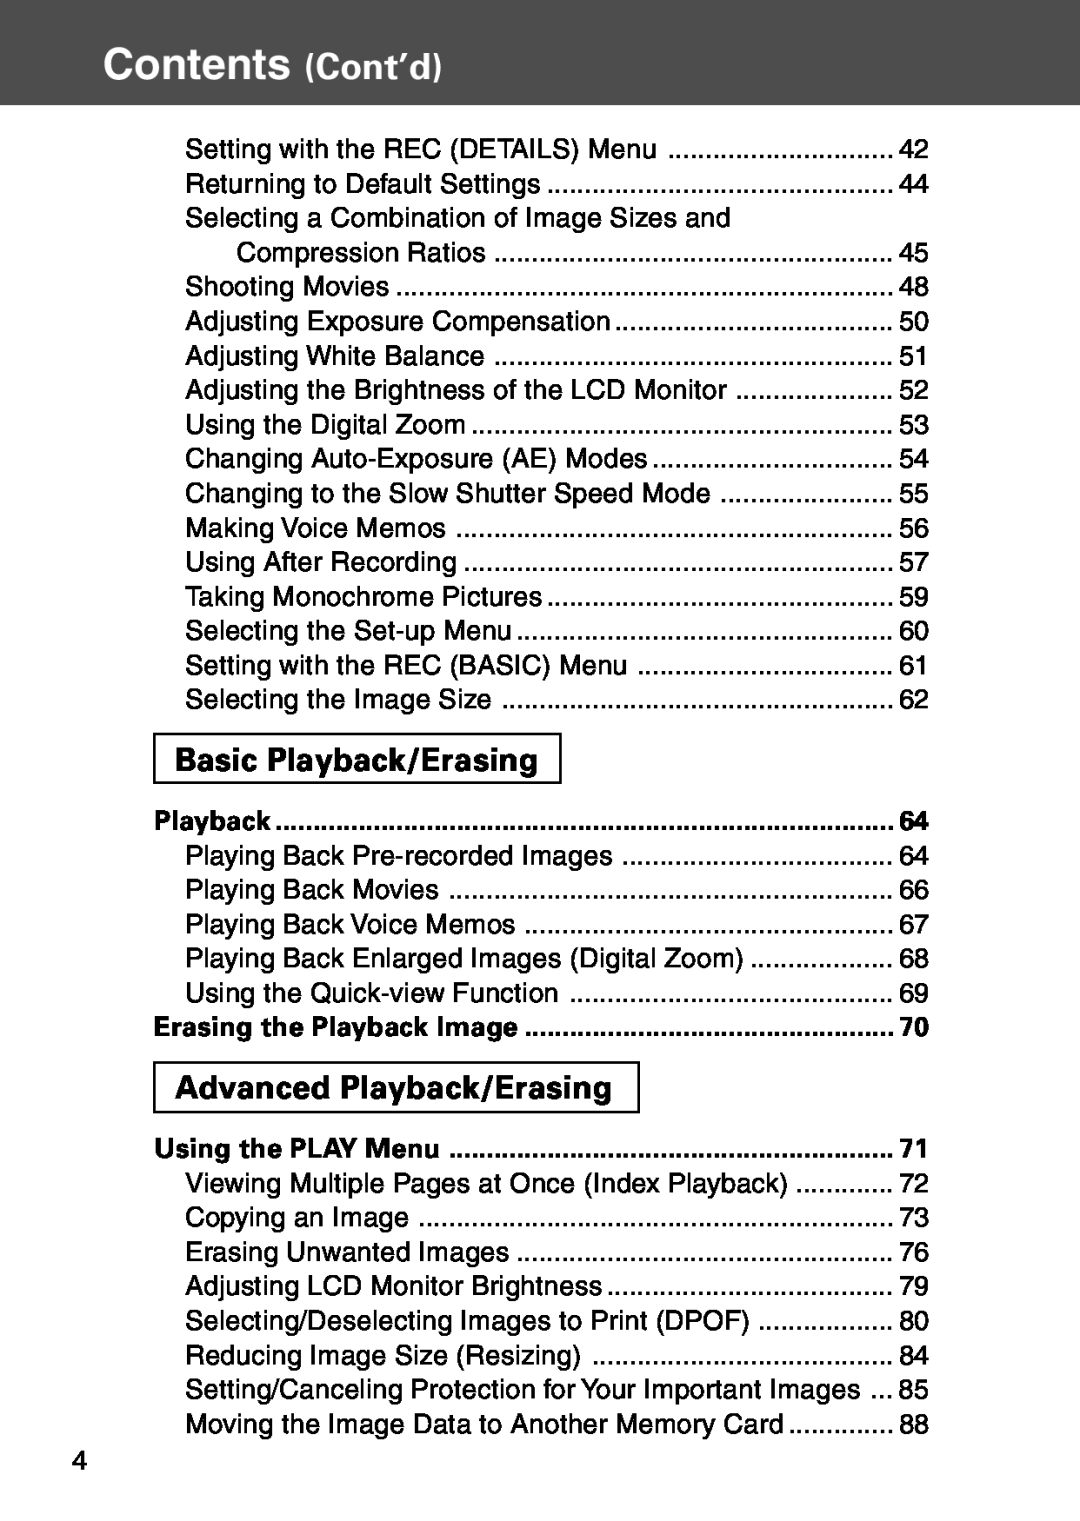 Konica Minolta KD-500Z user manual Contents Cont’d, Basic Playback/Erasing, Advanced Playback/Erasing 